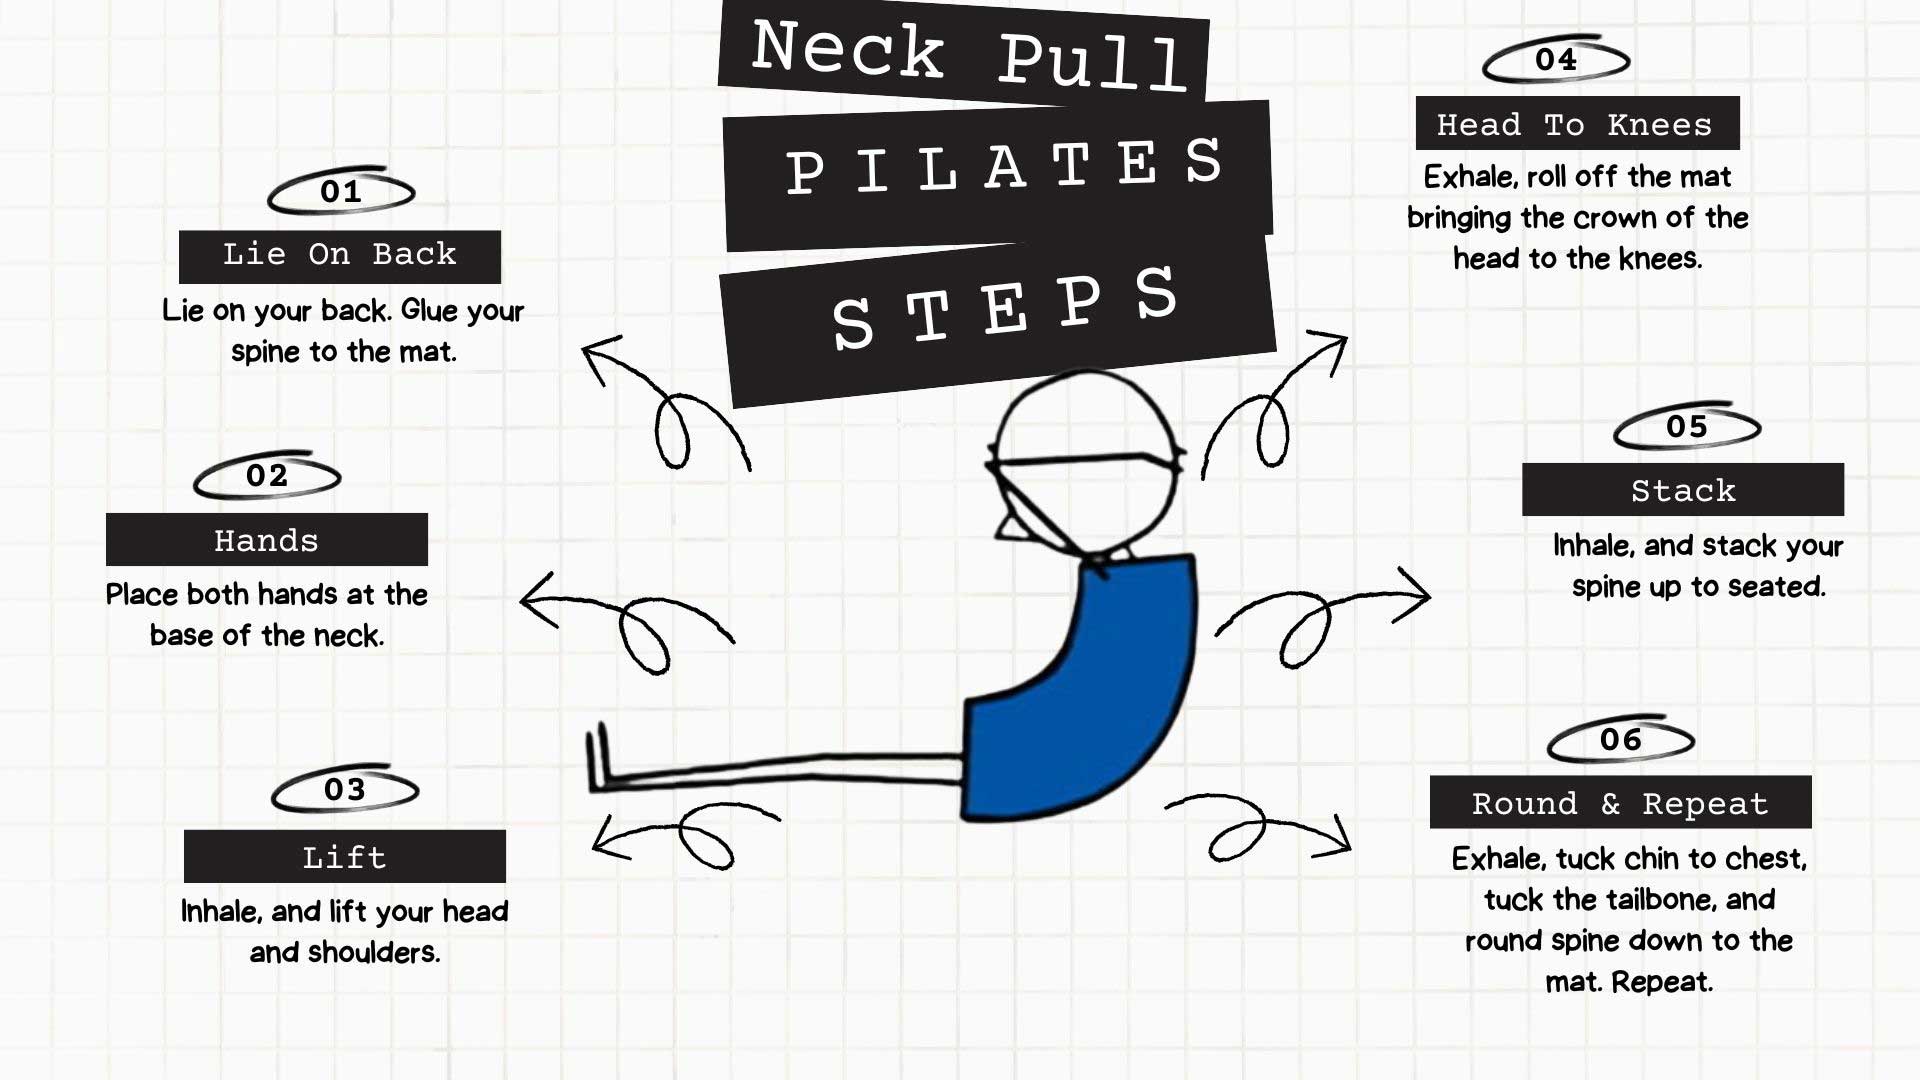 Neck Pull Pilates Steps Infographic